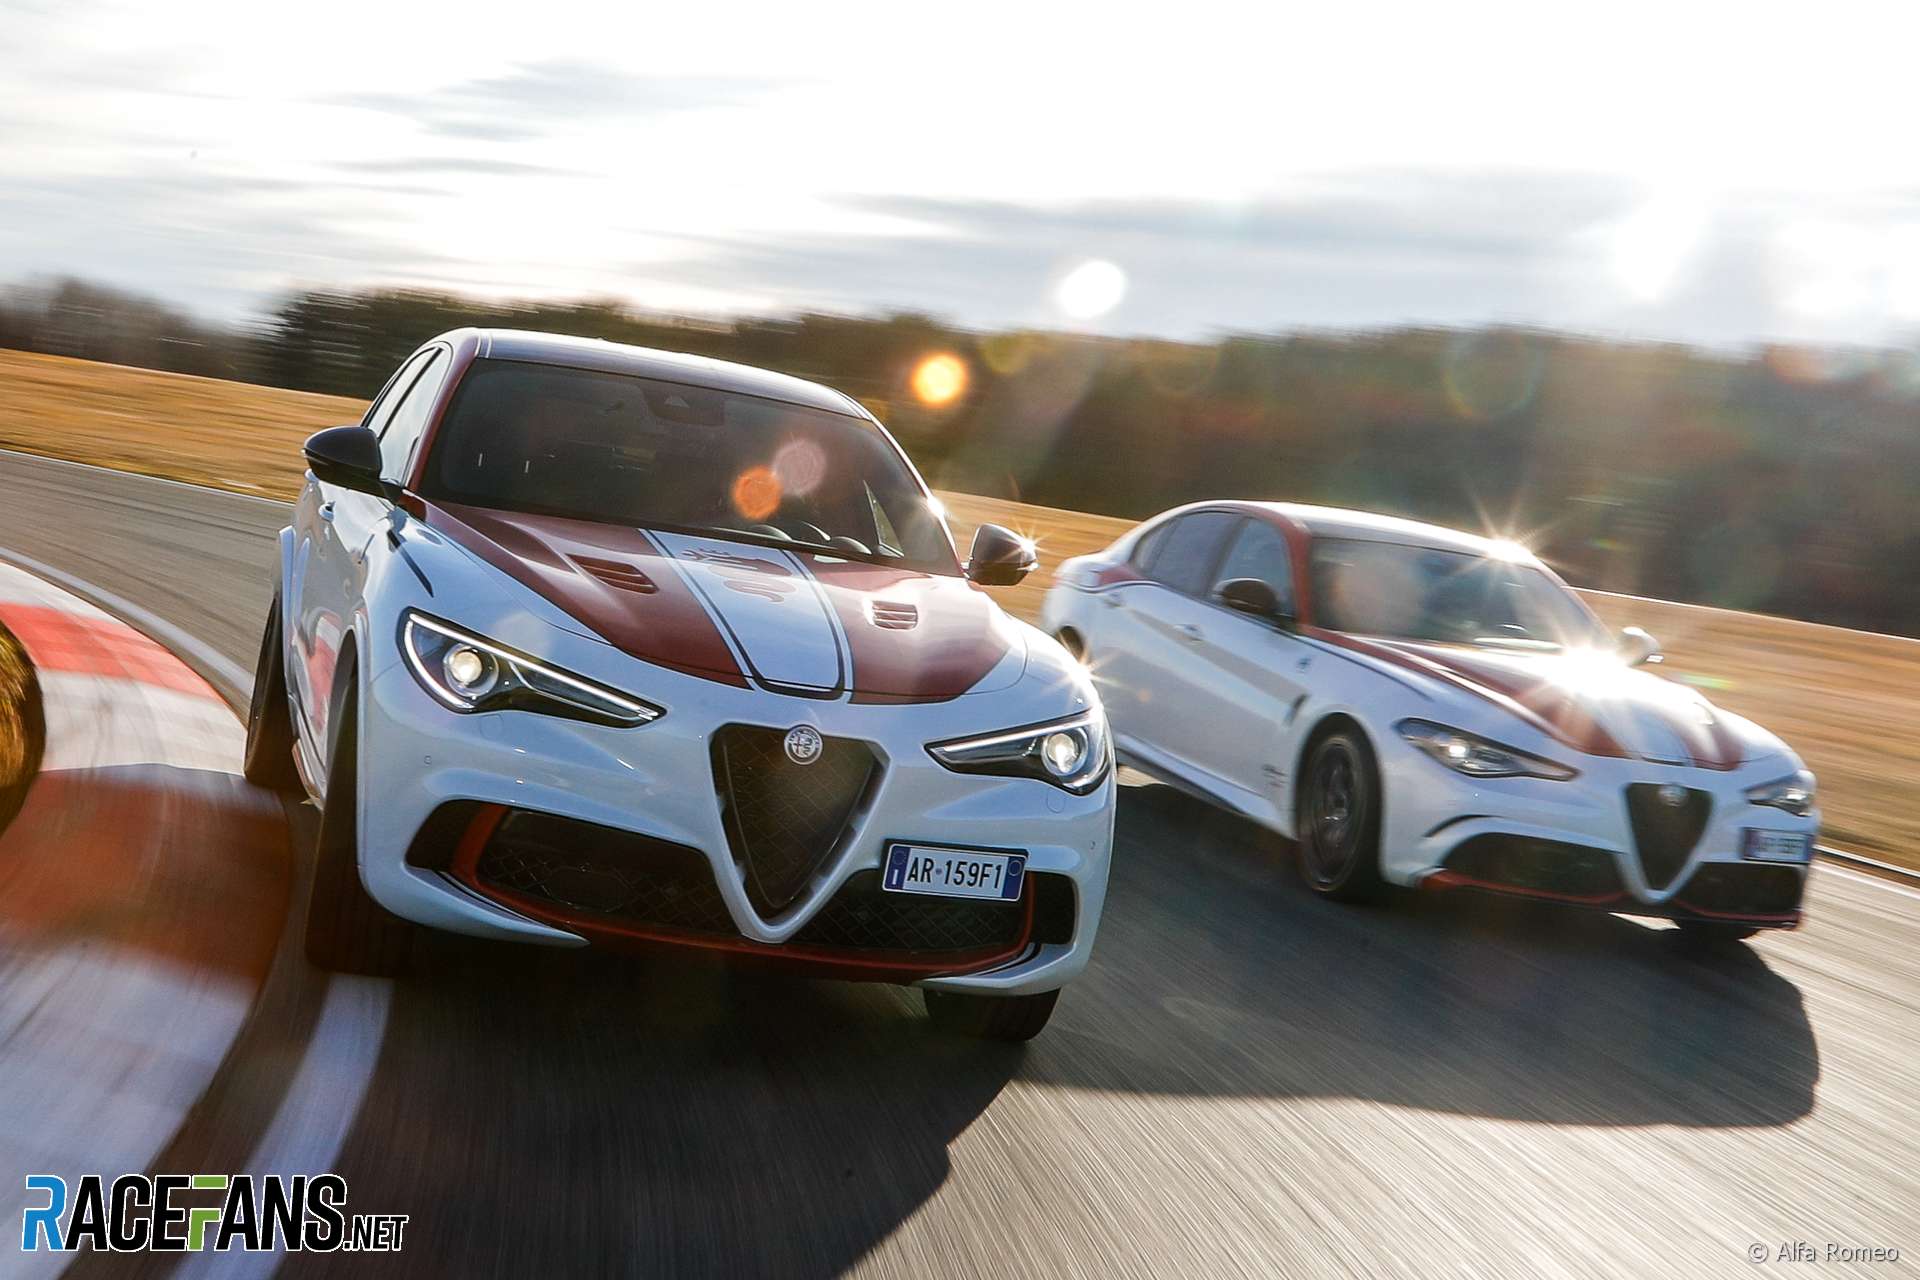 Alfa Romeo Giulia Quadrifoglio and Stelvio Quadrifoglio “Alfa Romeo Racing” special editions, 2019